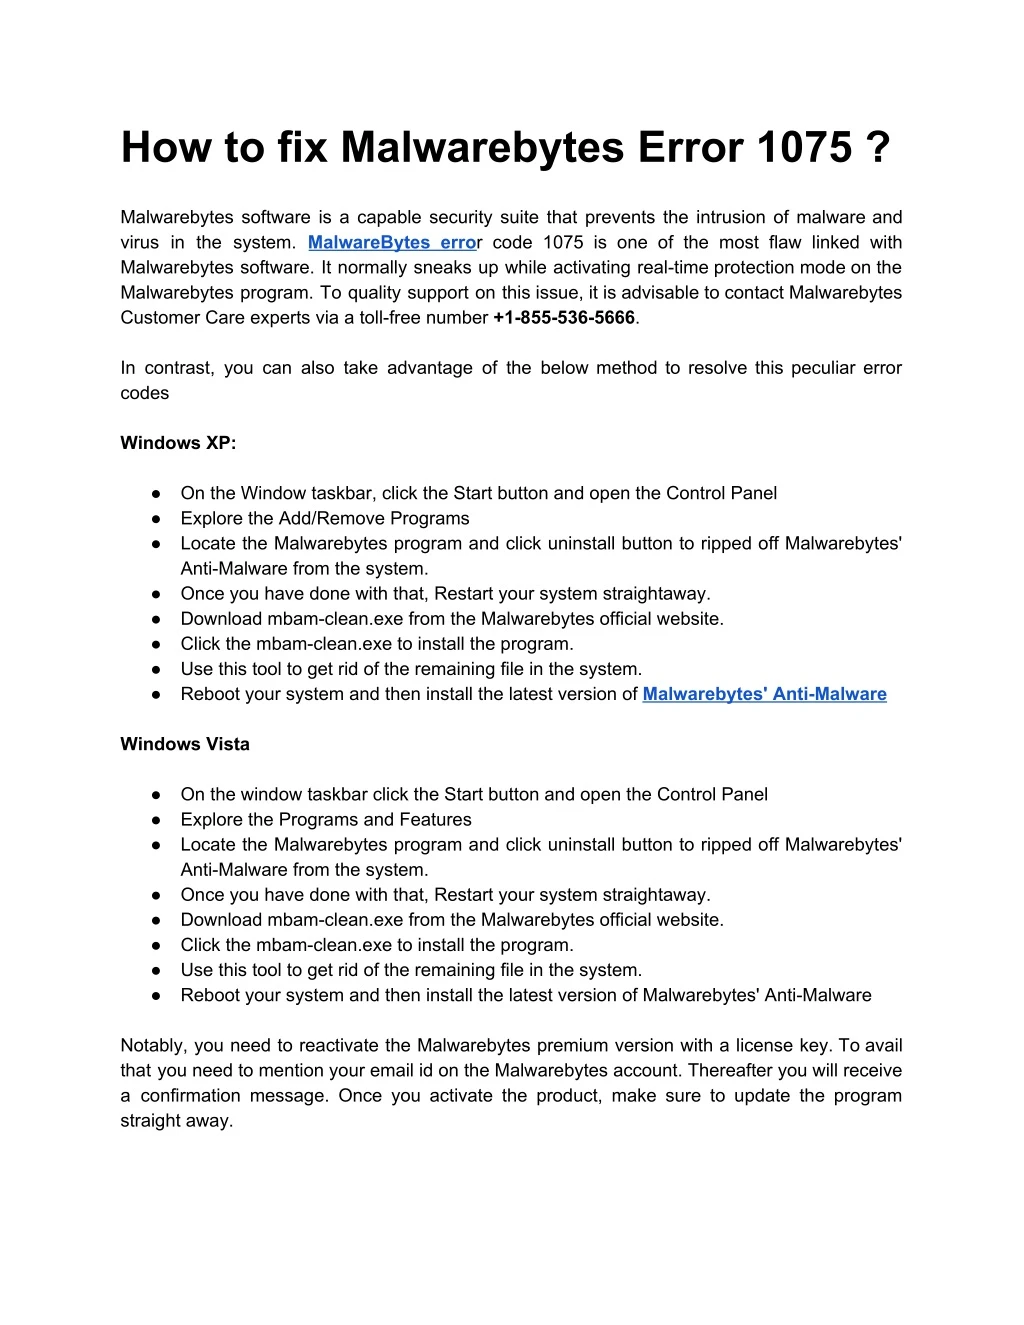 how to fix malwarebytes error 1075